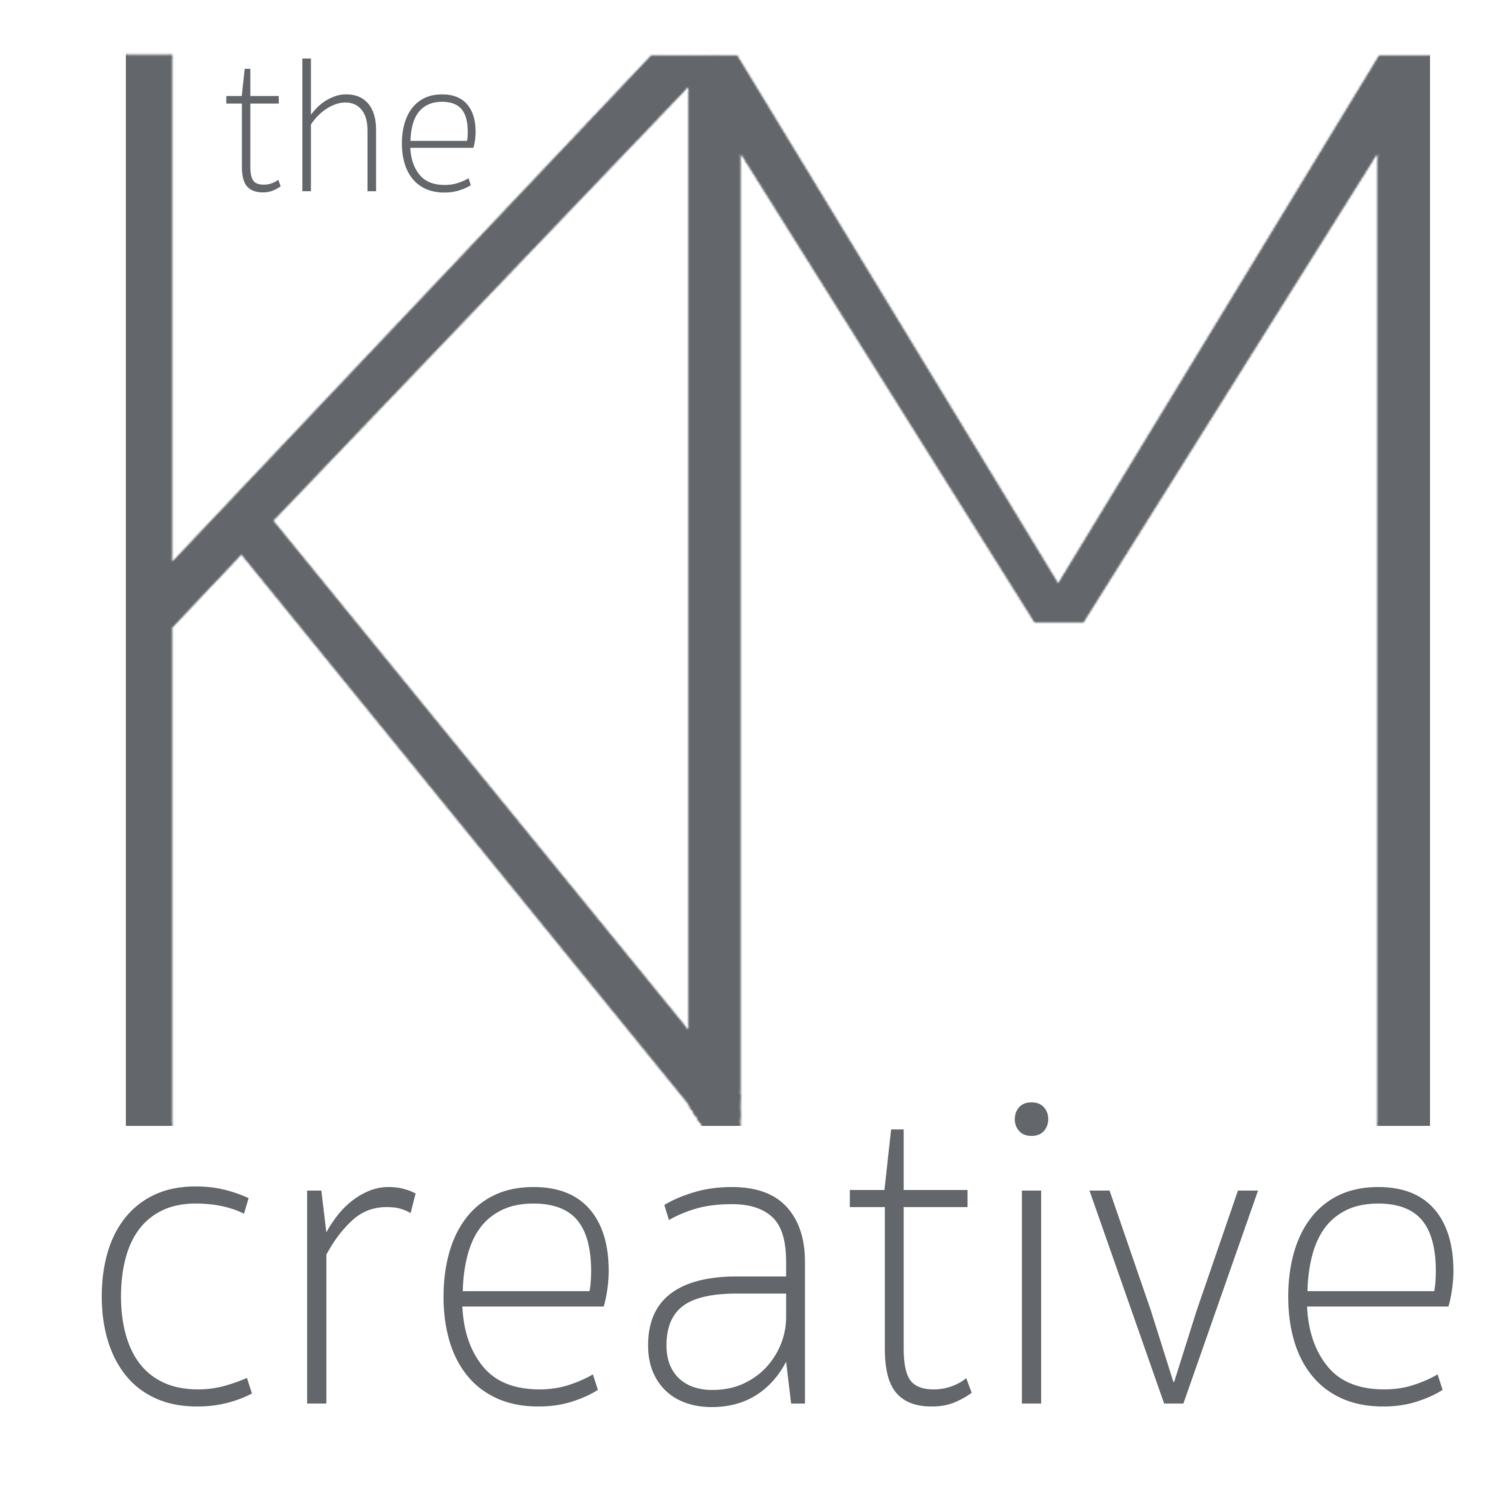 The KM Creative